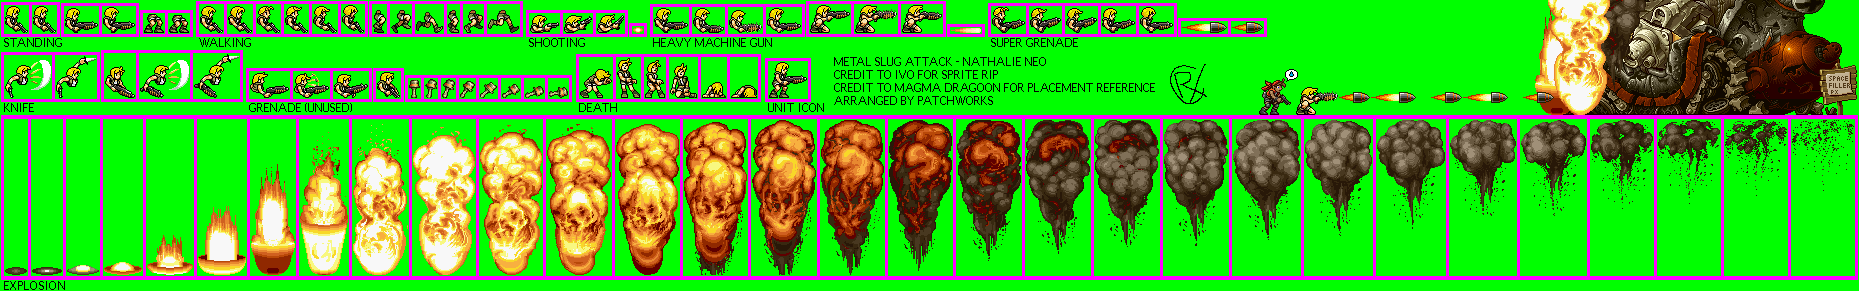 Metal Slug Attack - Nathalie Neo